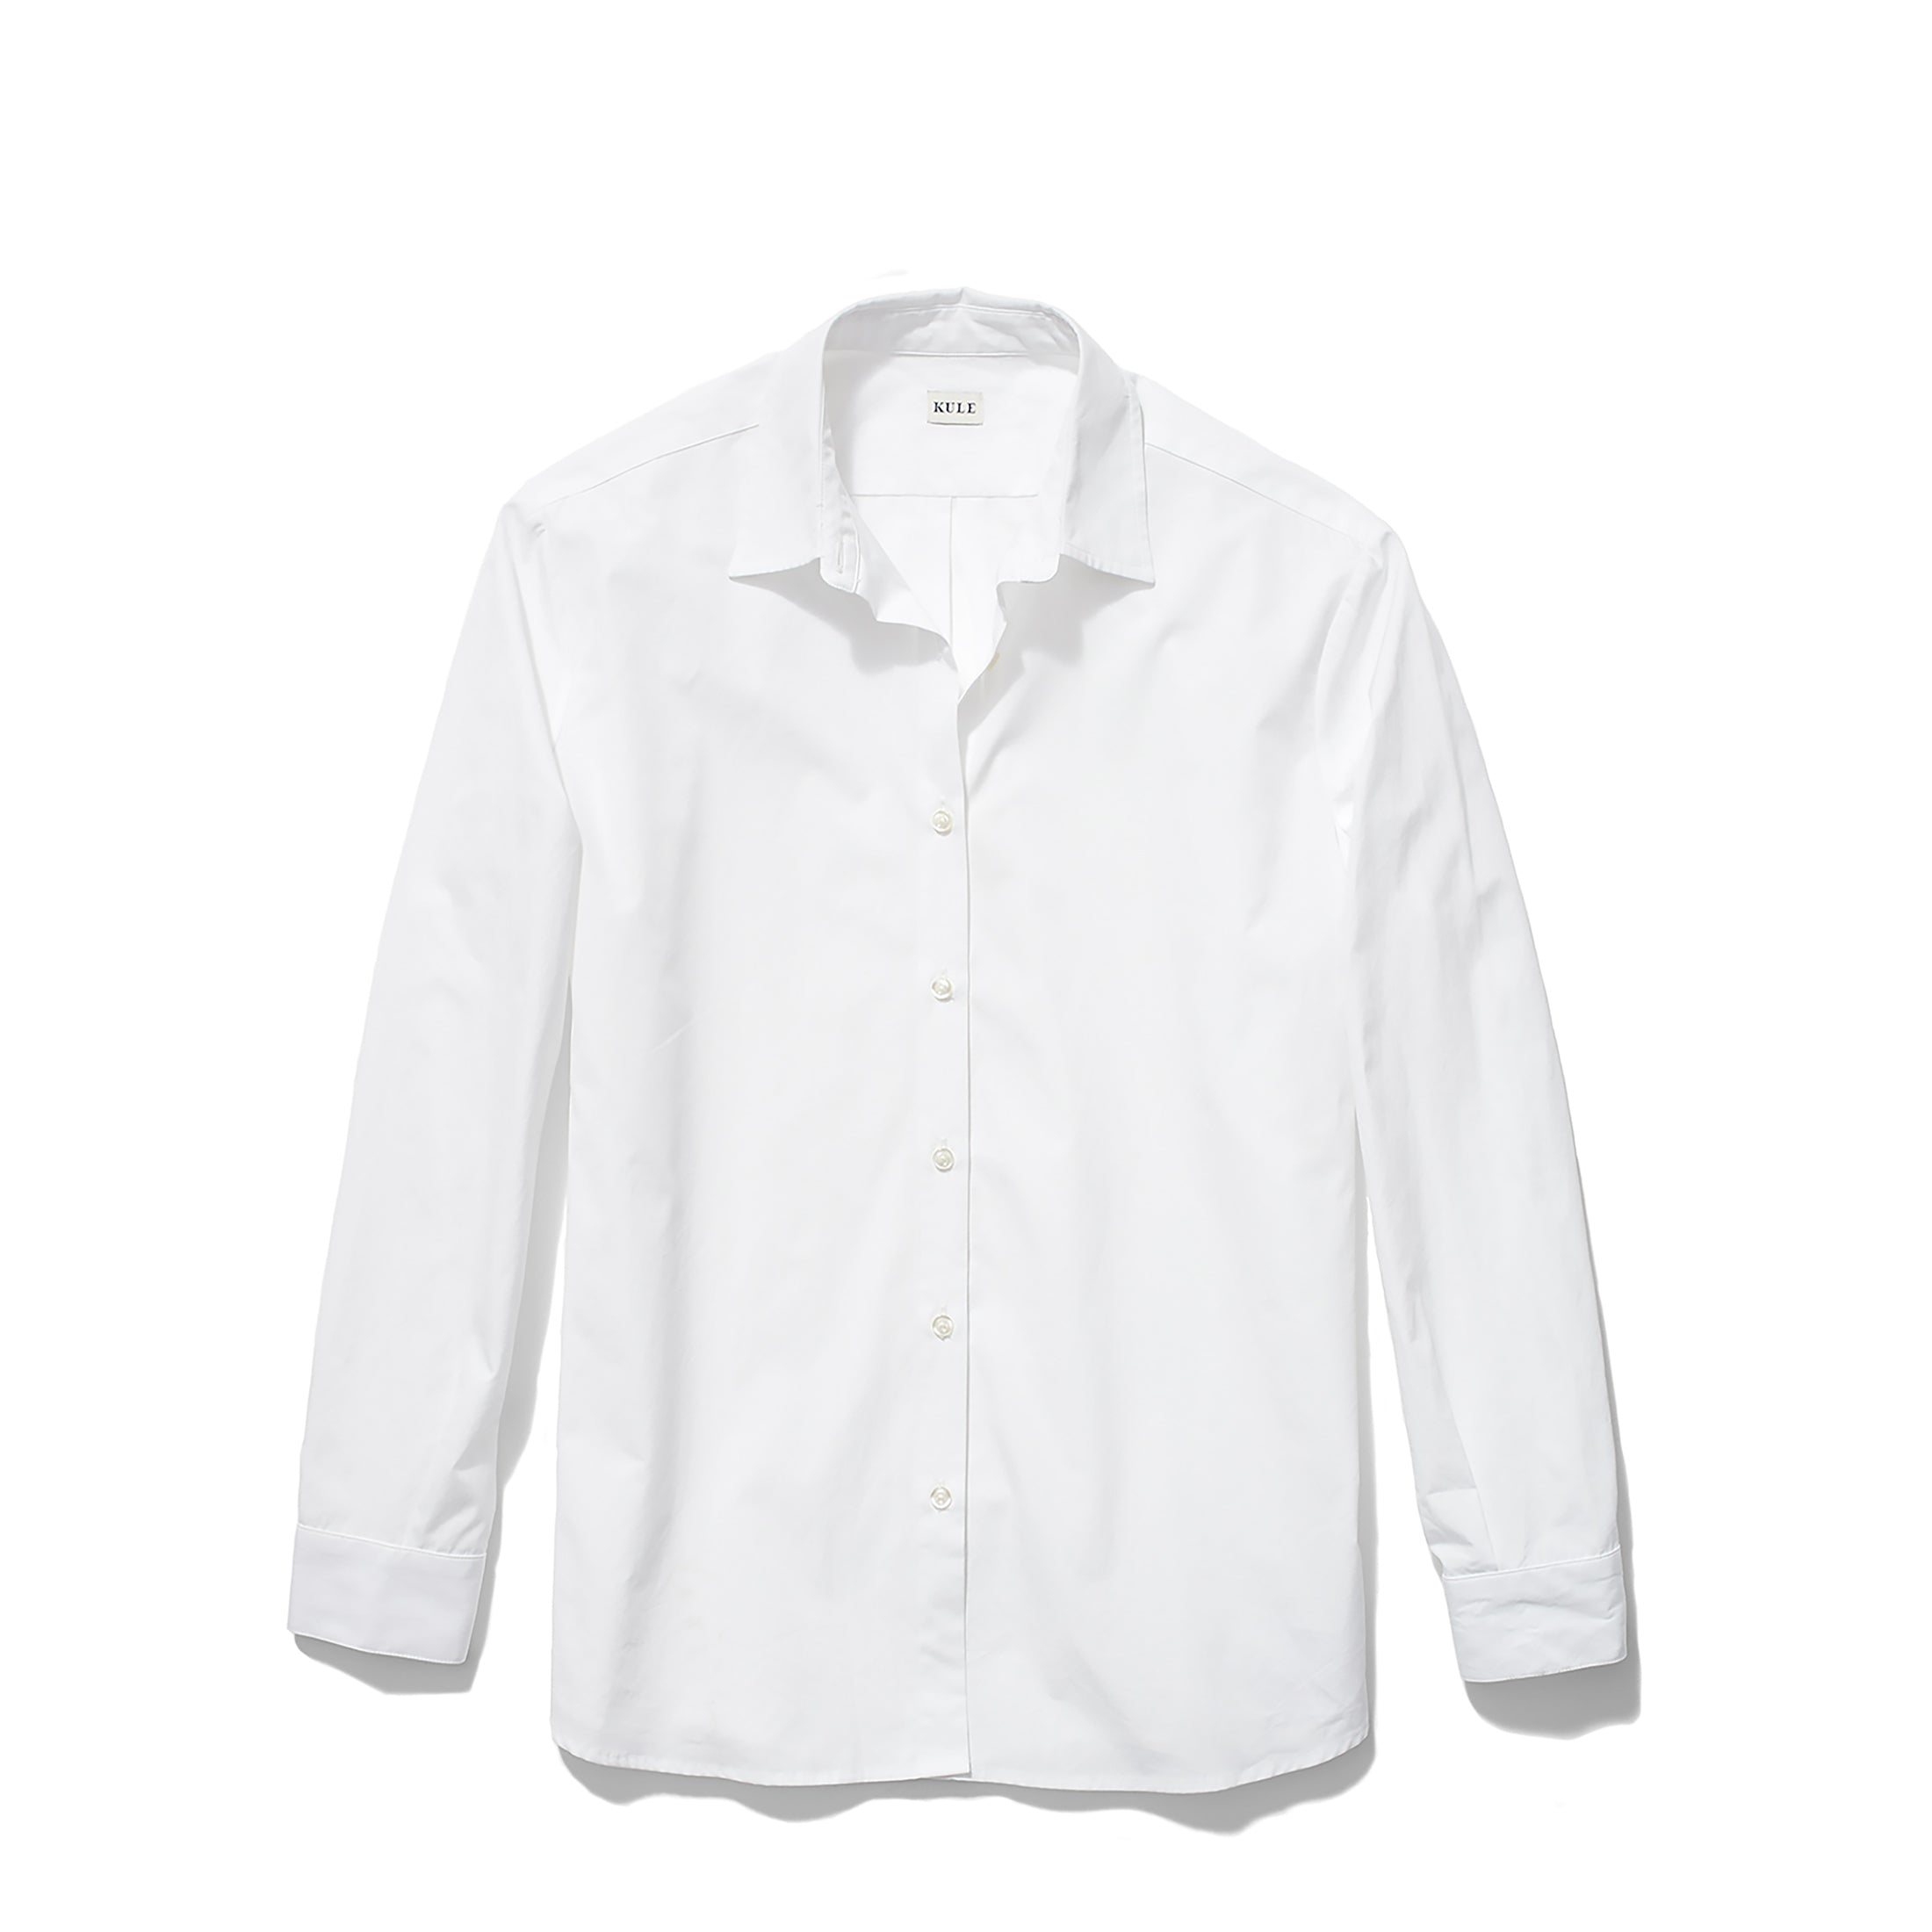 Men's Shirt - White - XL